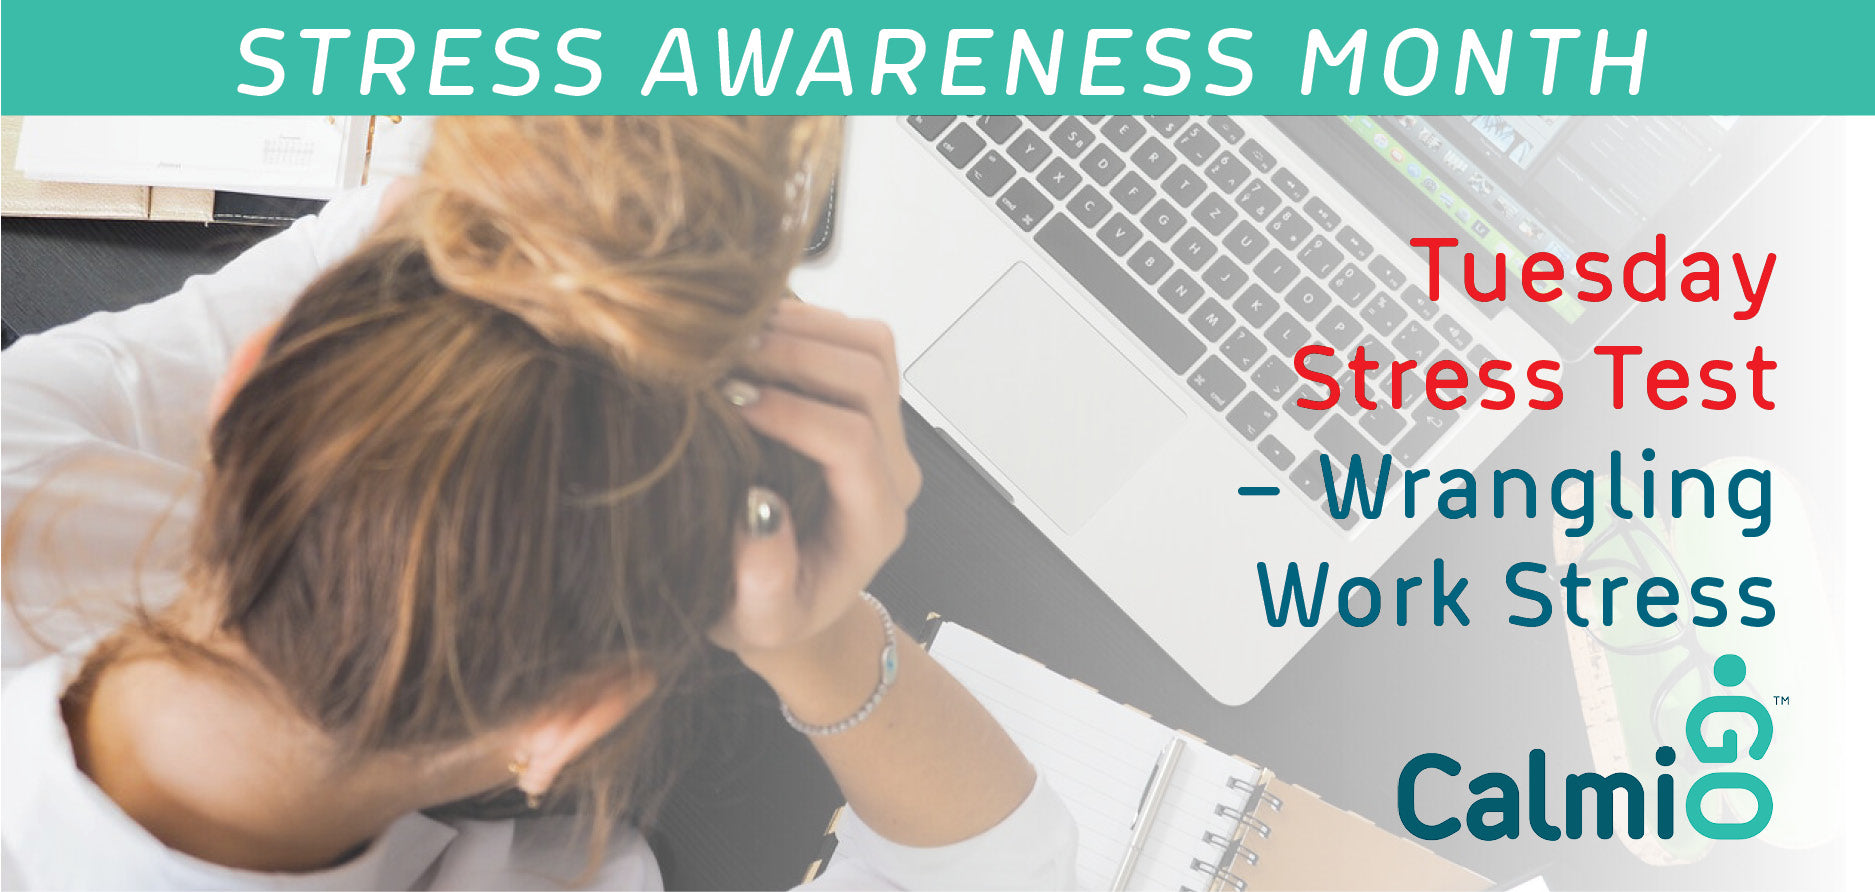 April 2 – Stress Awareness Month Tuesday Stress Test – Wrangling Work Stress